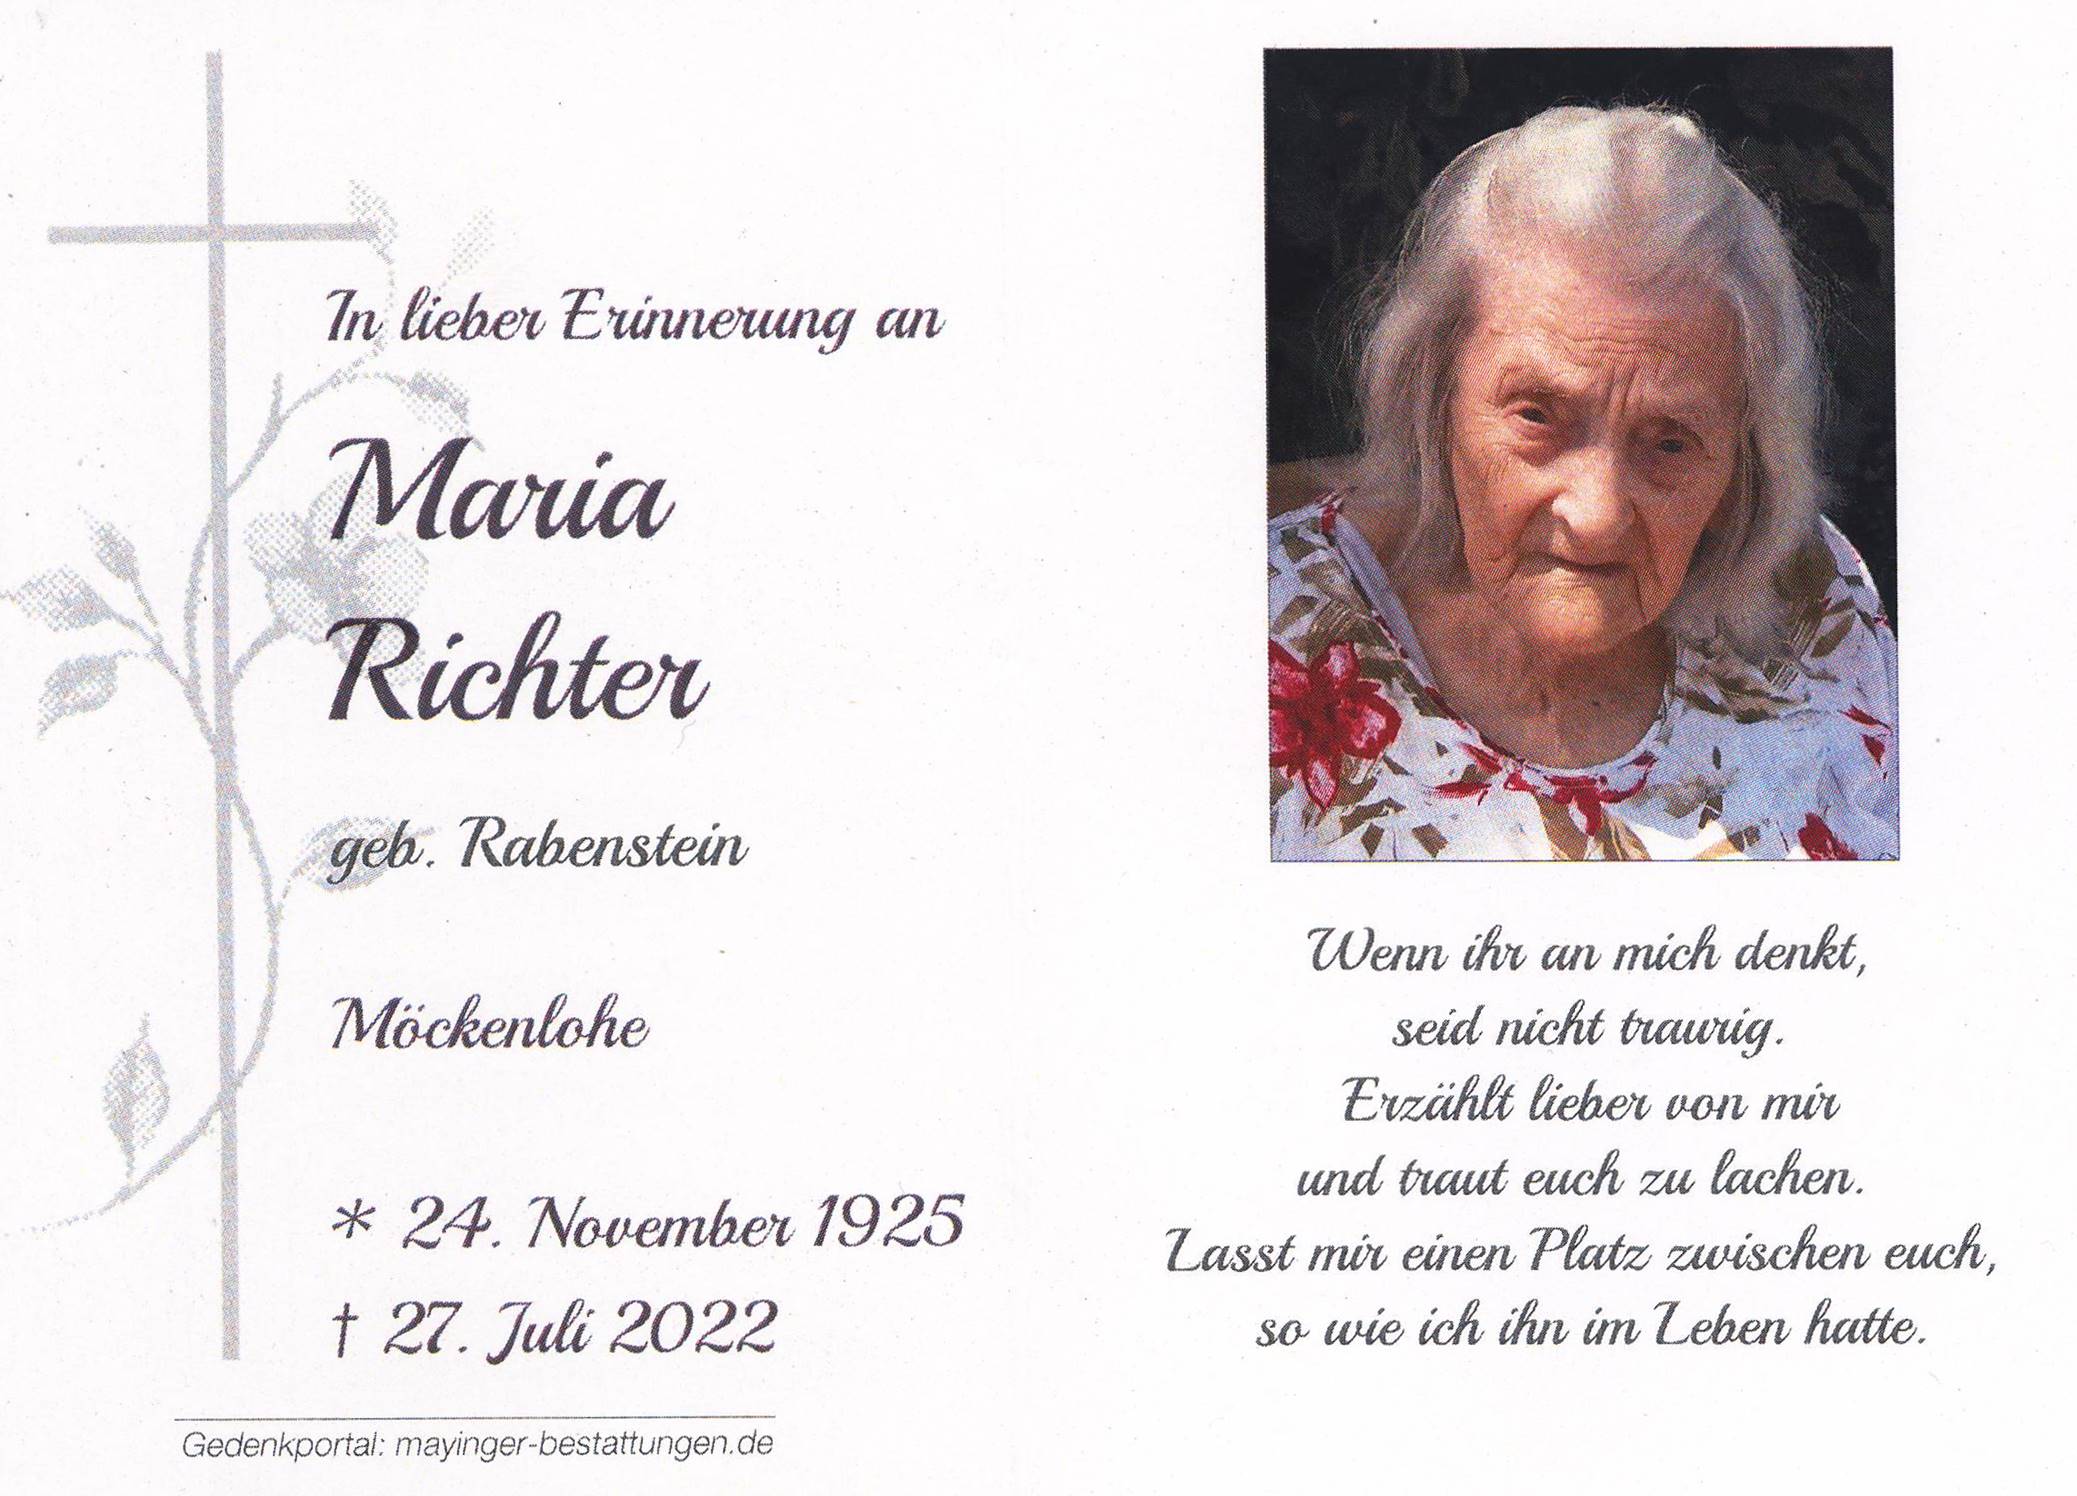 Maria Richter